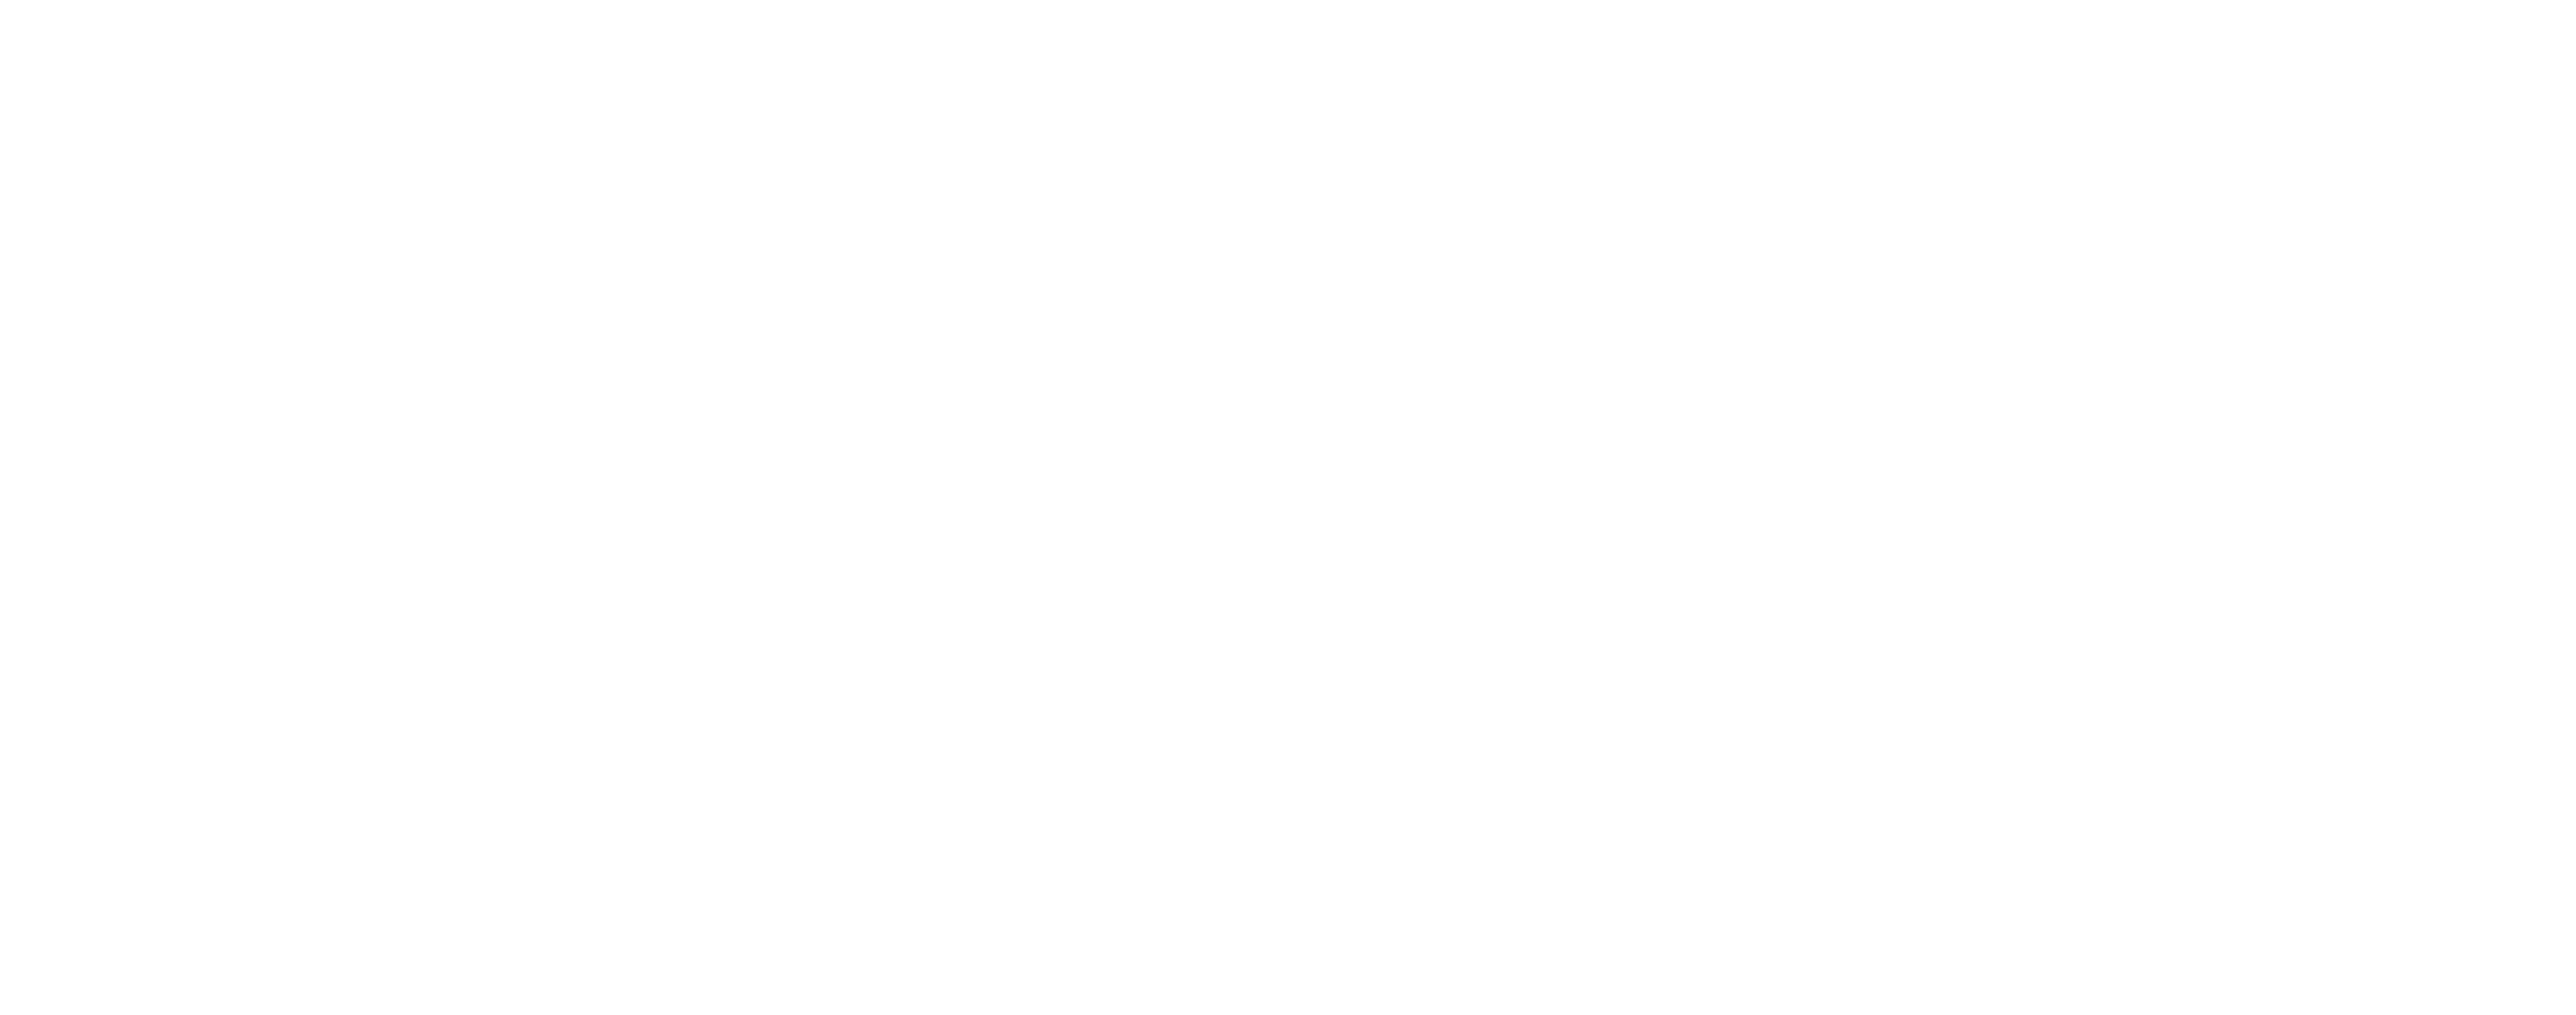 Rollinmotions - Audiovisual Agency